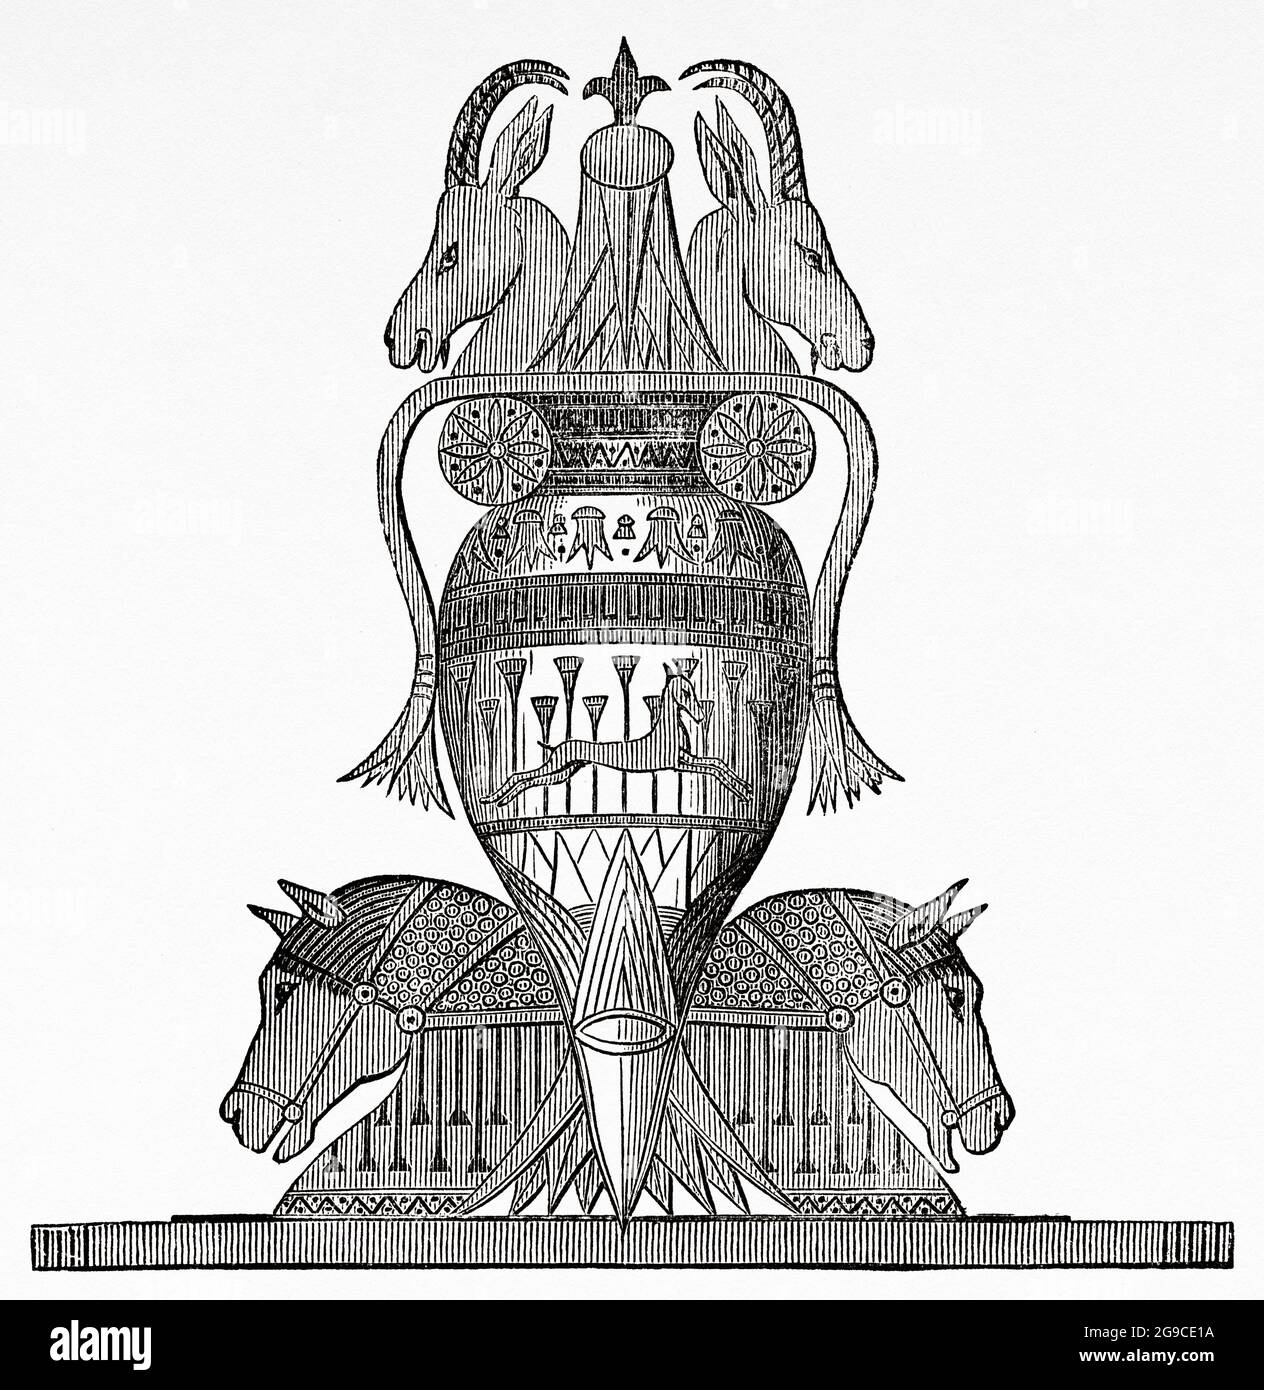 Ancient egyptian vase. Egyptian Civilisation, Egypt, North Africa. Old 19th century engraved illustration from El Mundo Ilustrado 1879 Stock Photo